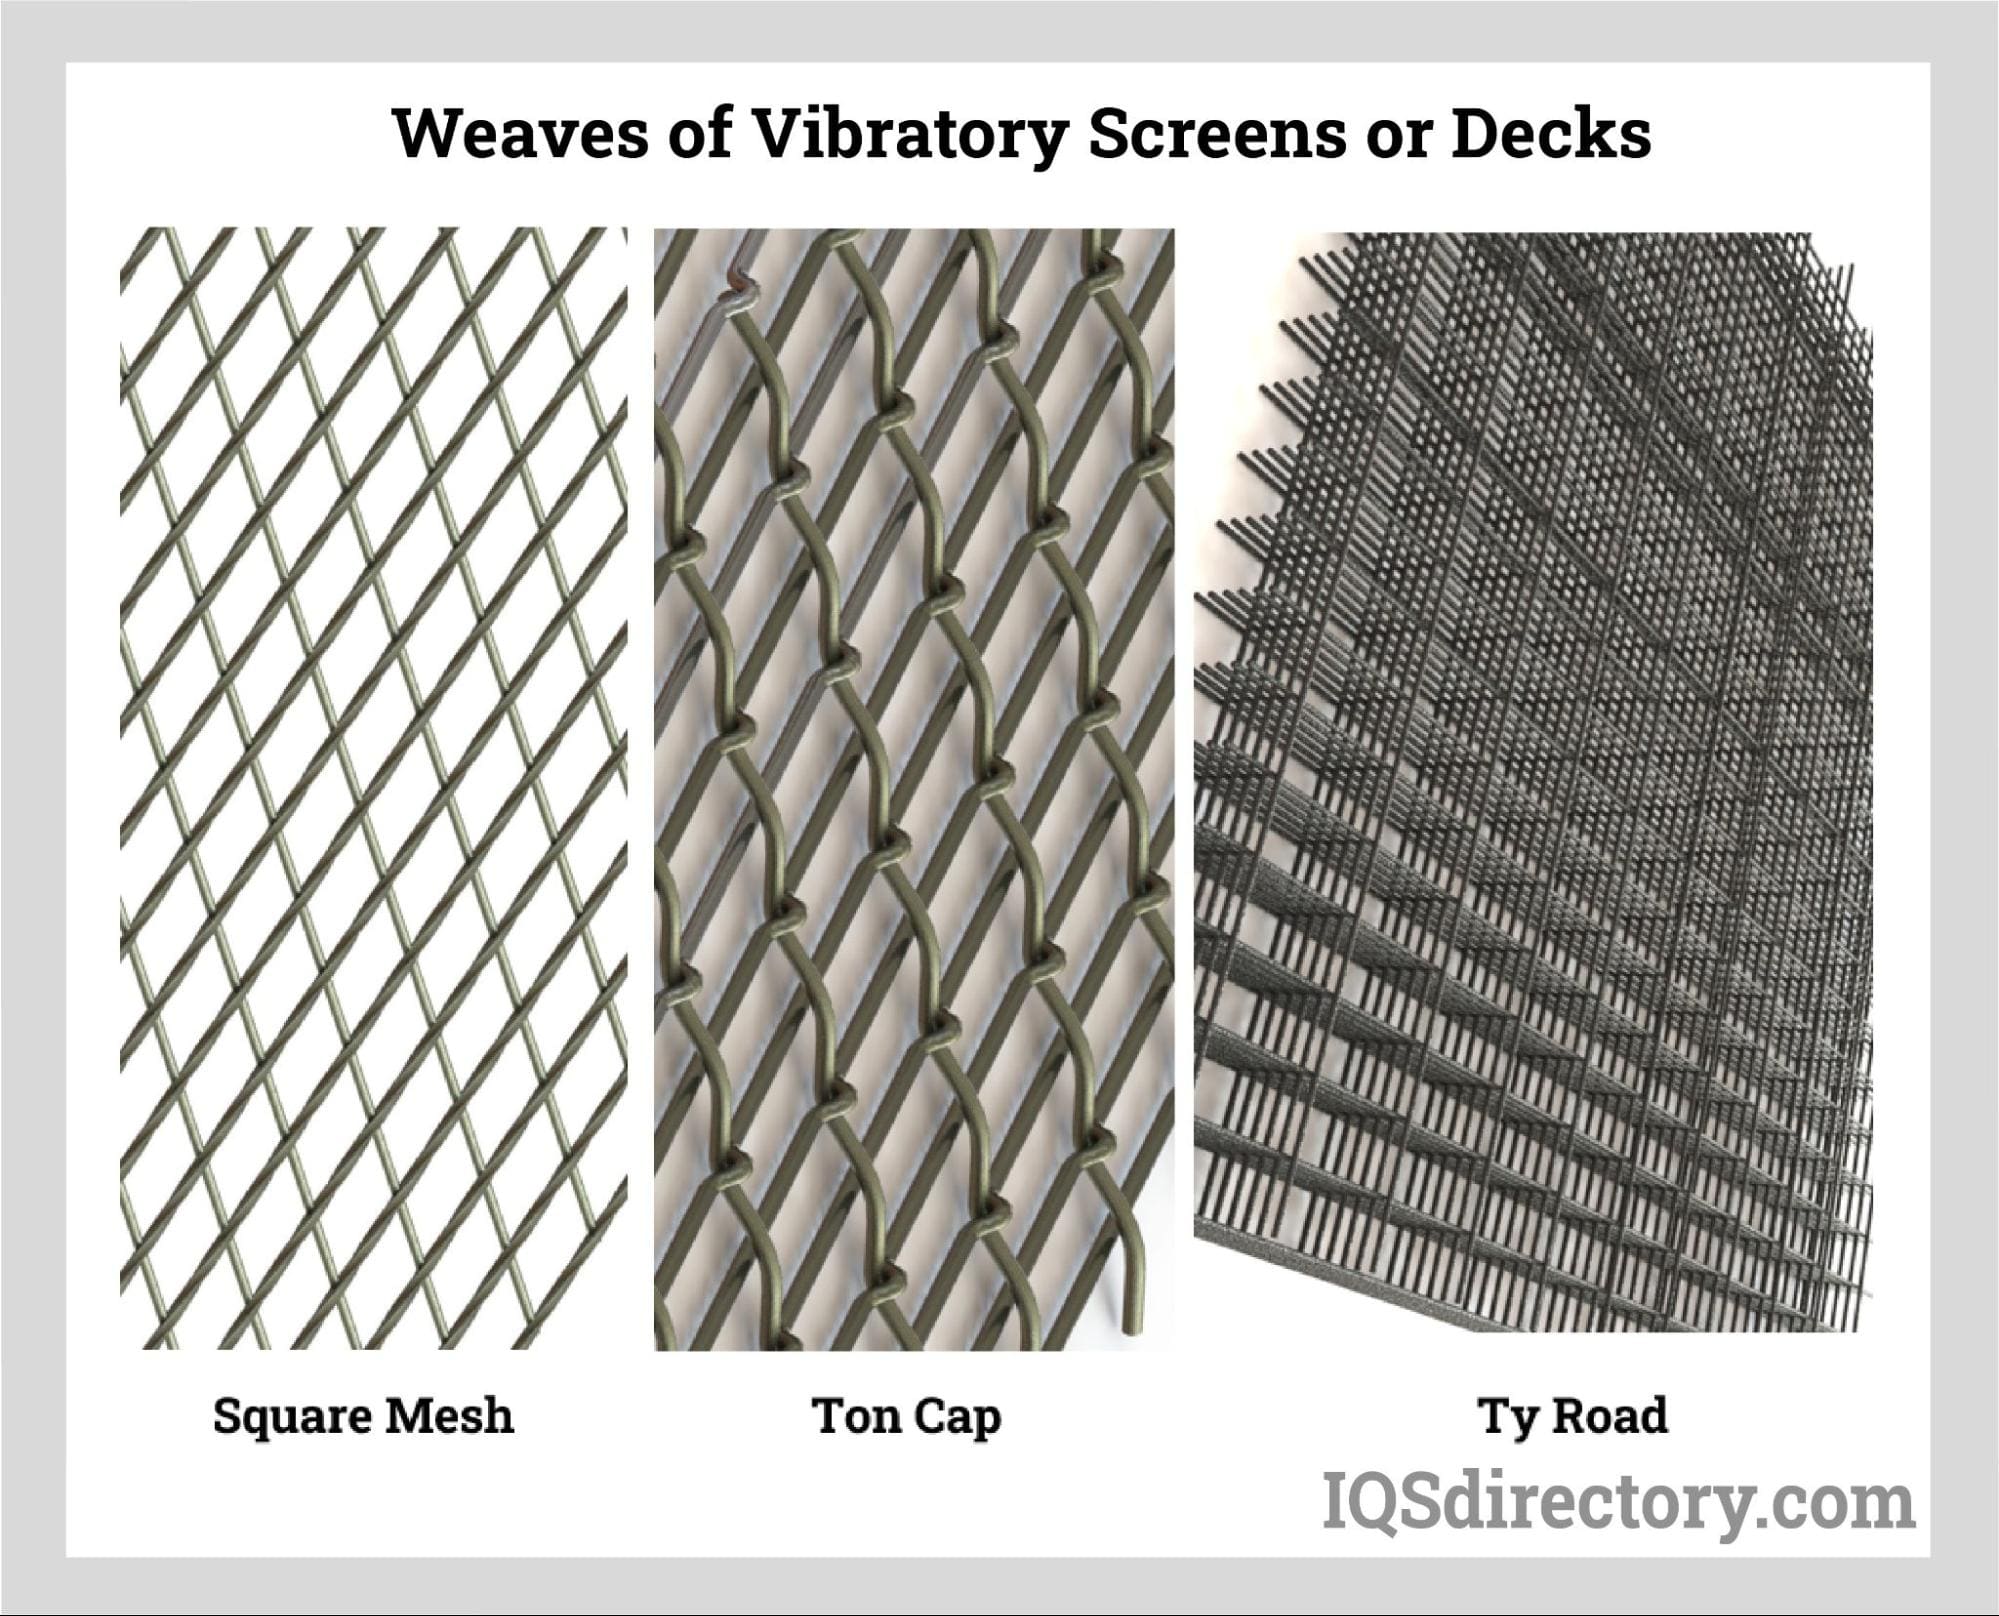 Weaves of Vibratory Screens or Decks